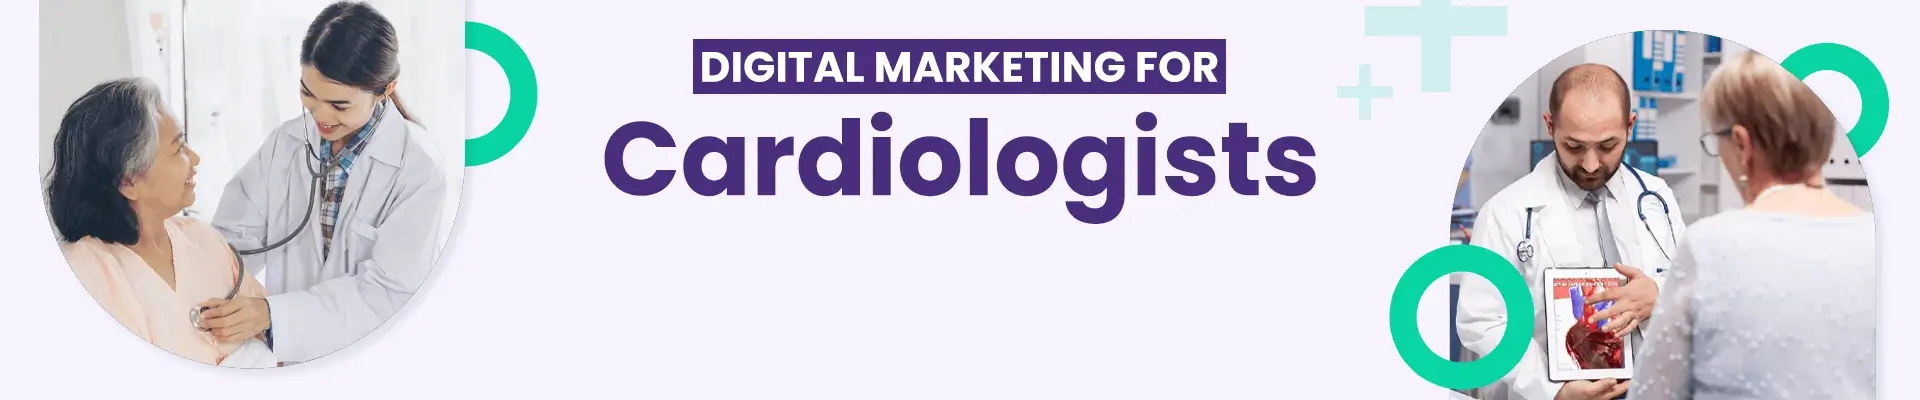 Digital Marketing Cardiologists